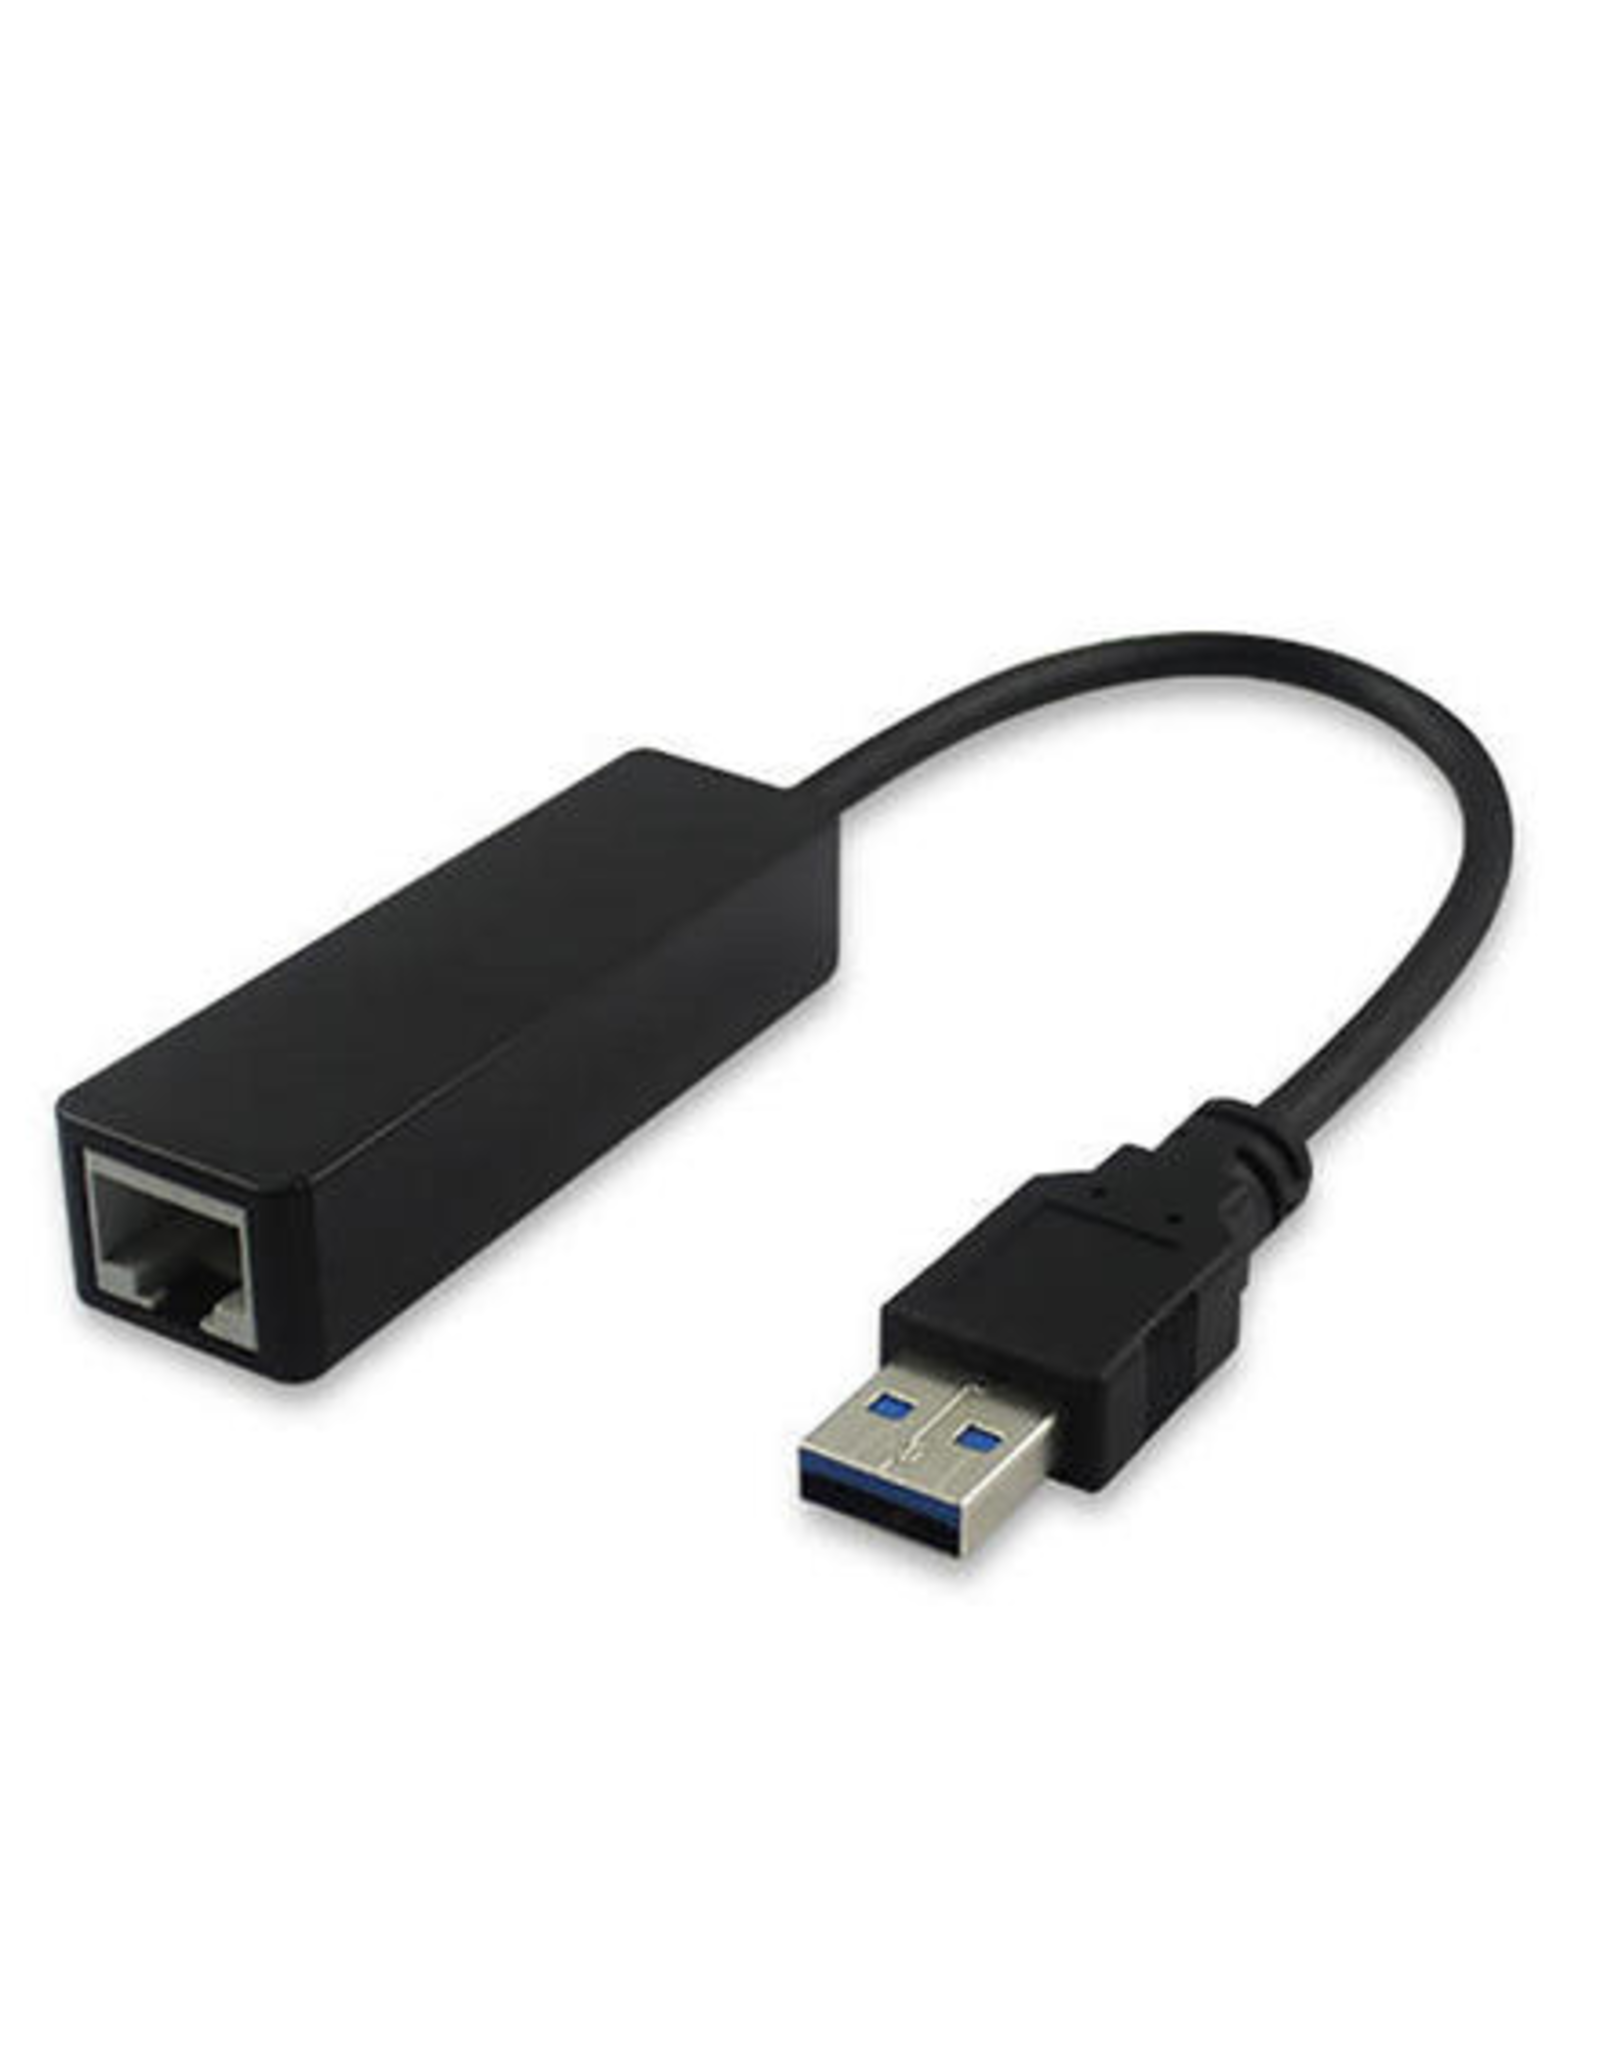 USB 3.0 to RJ45 LAN Gigabits Ethernet Adapter, Black